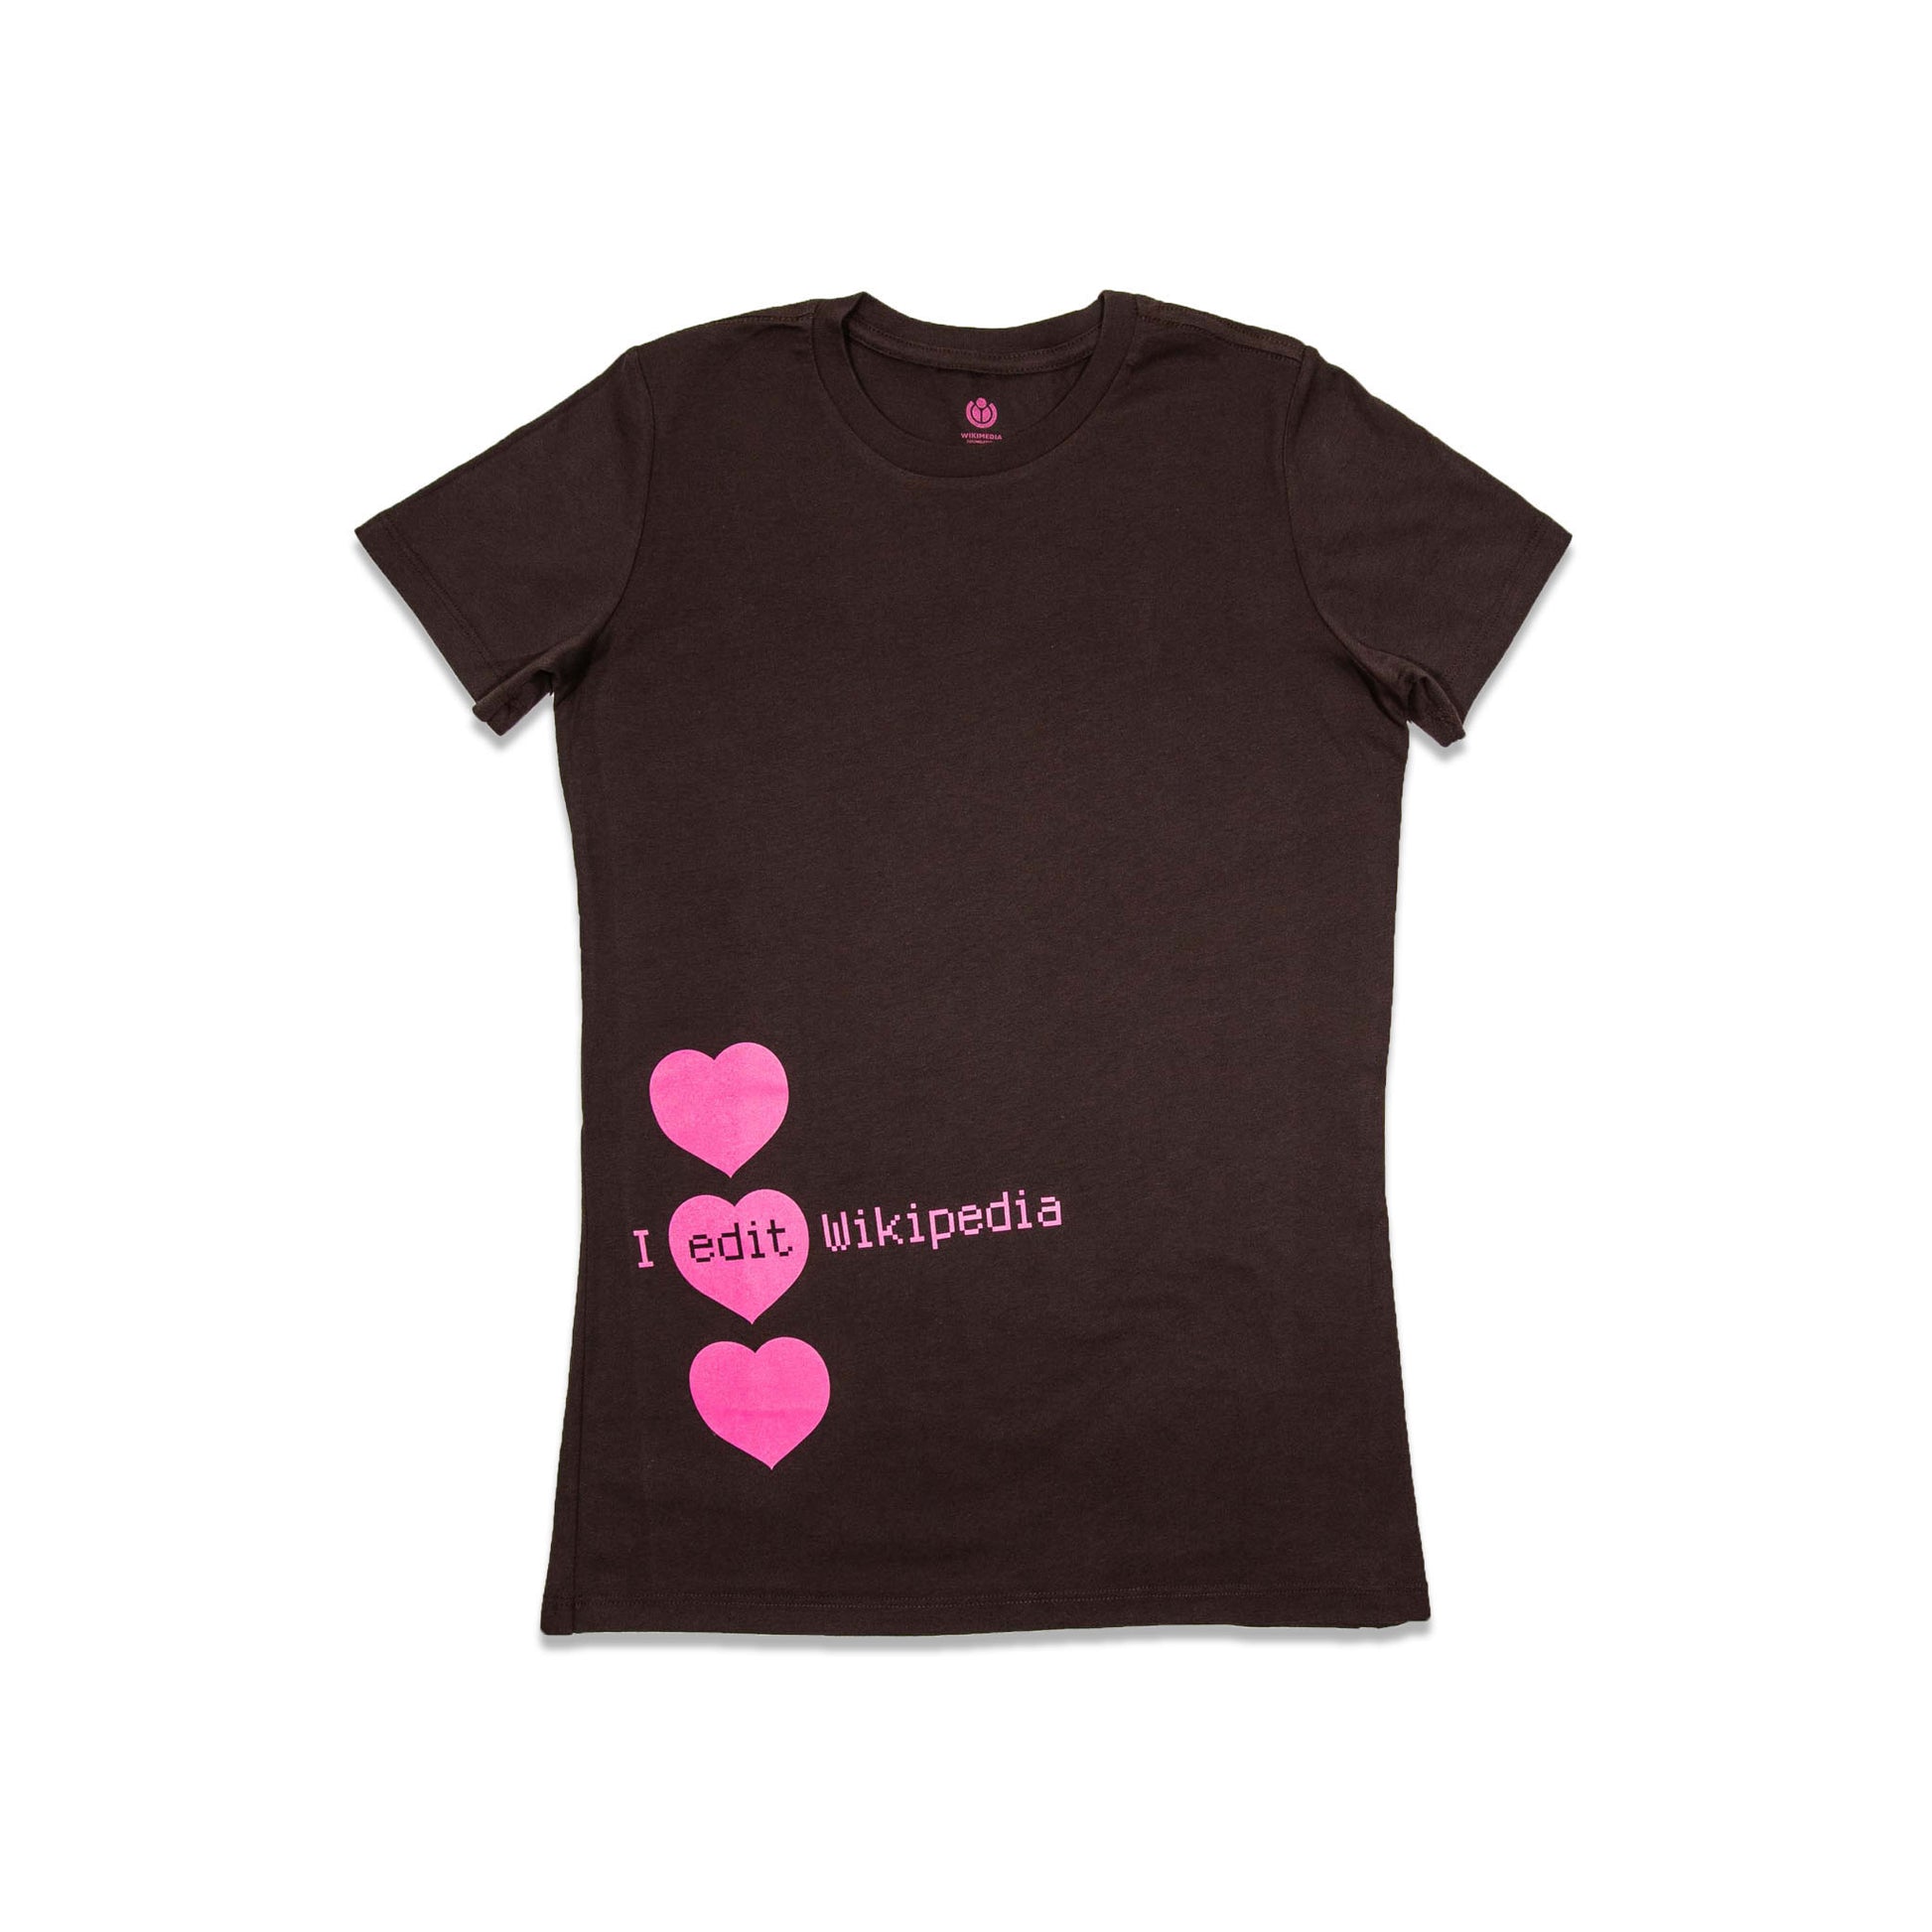 I edit Wikipedia heart t-shirt (women)